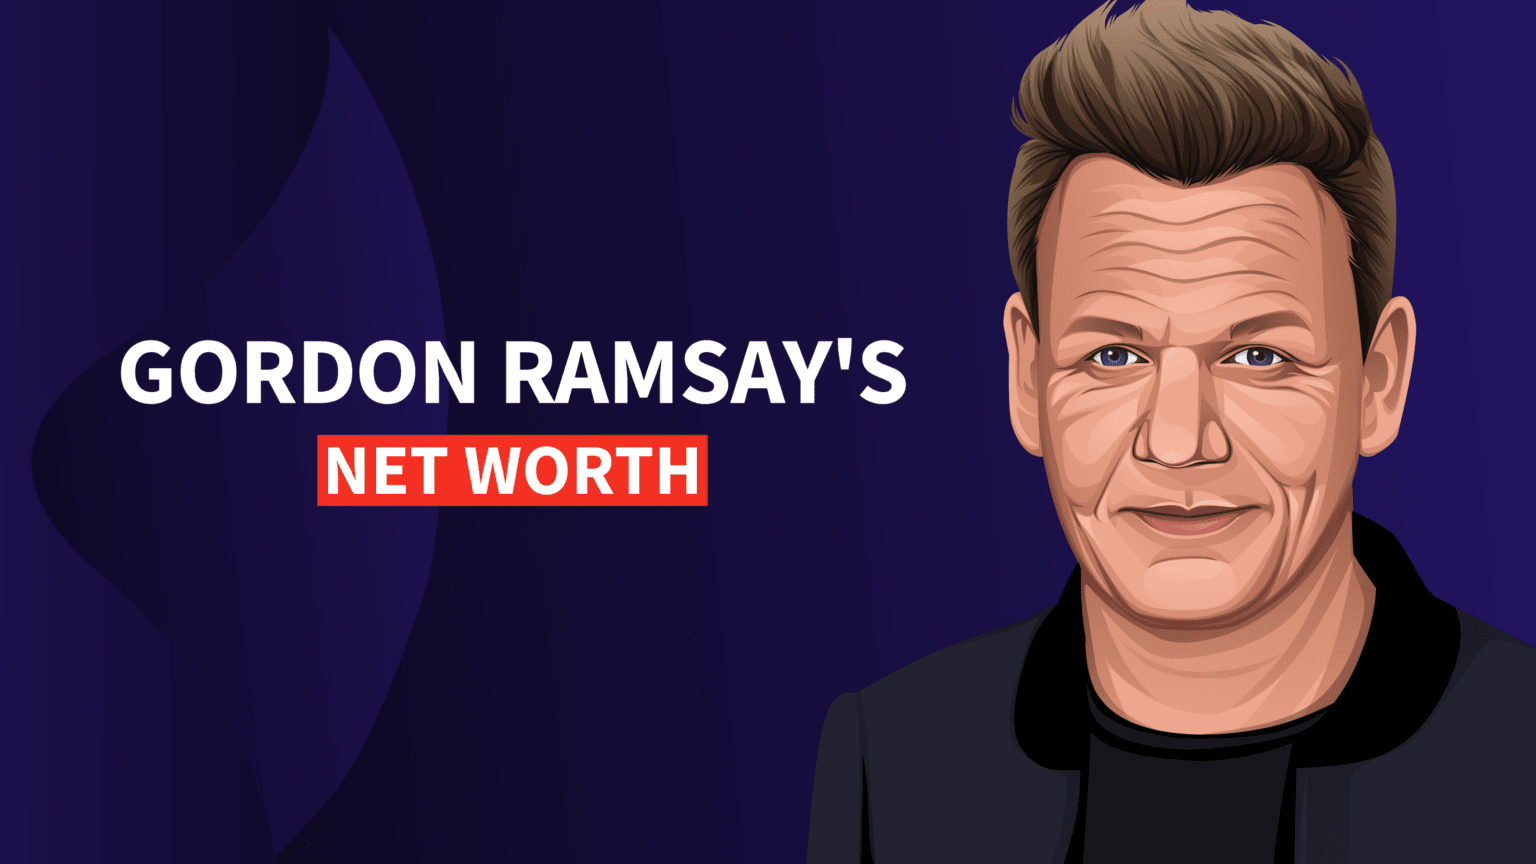 Gordon Ramsay's Net Worth and Inspiring Story